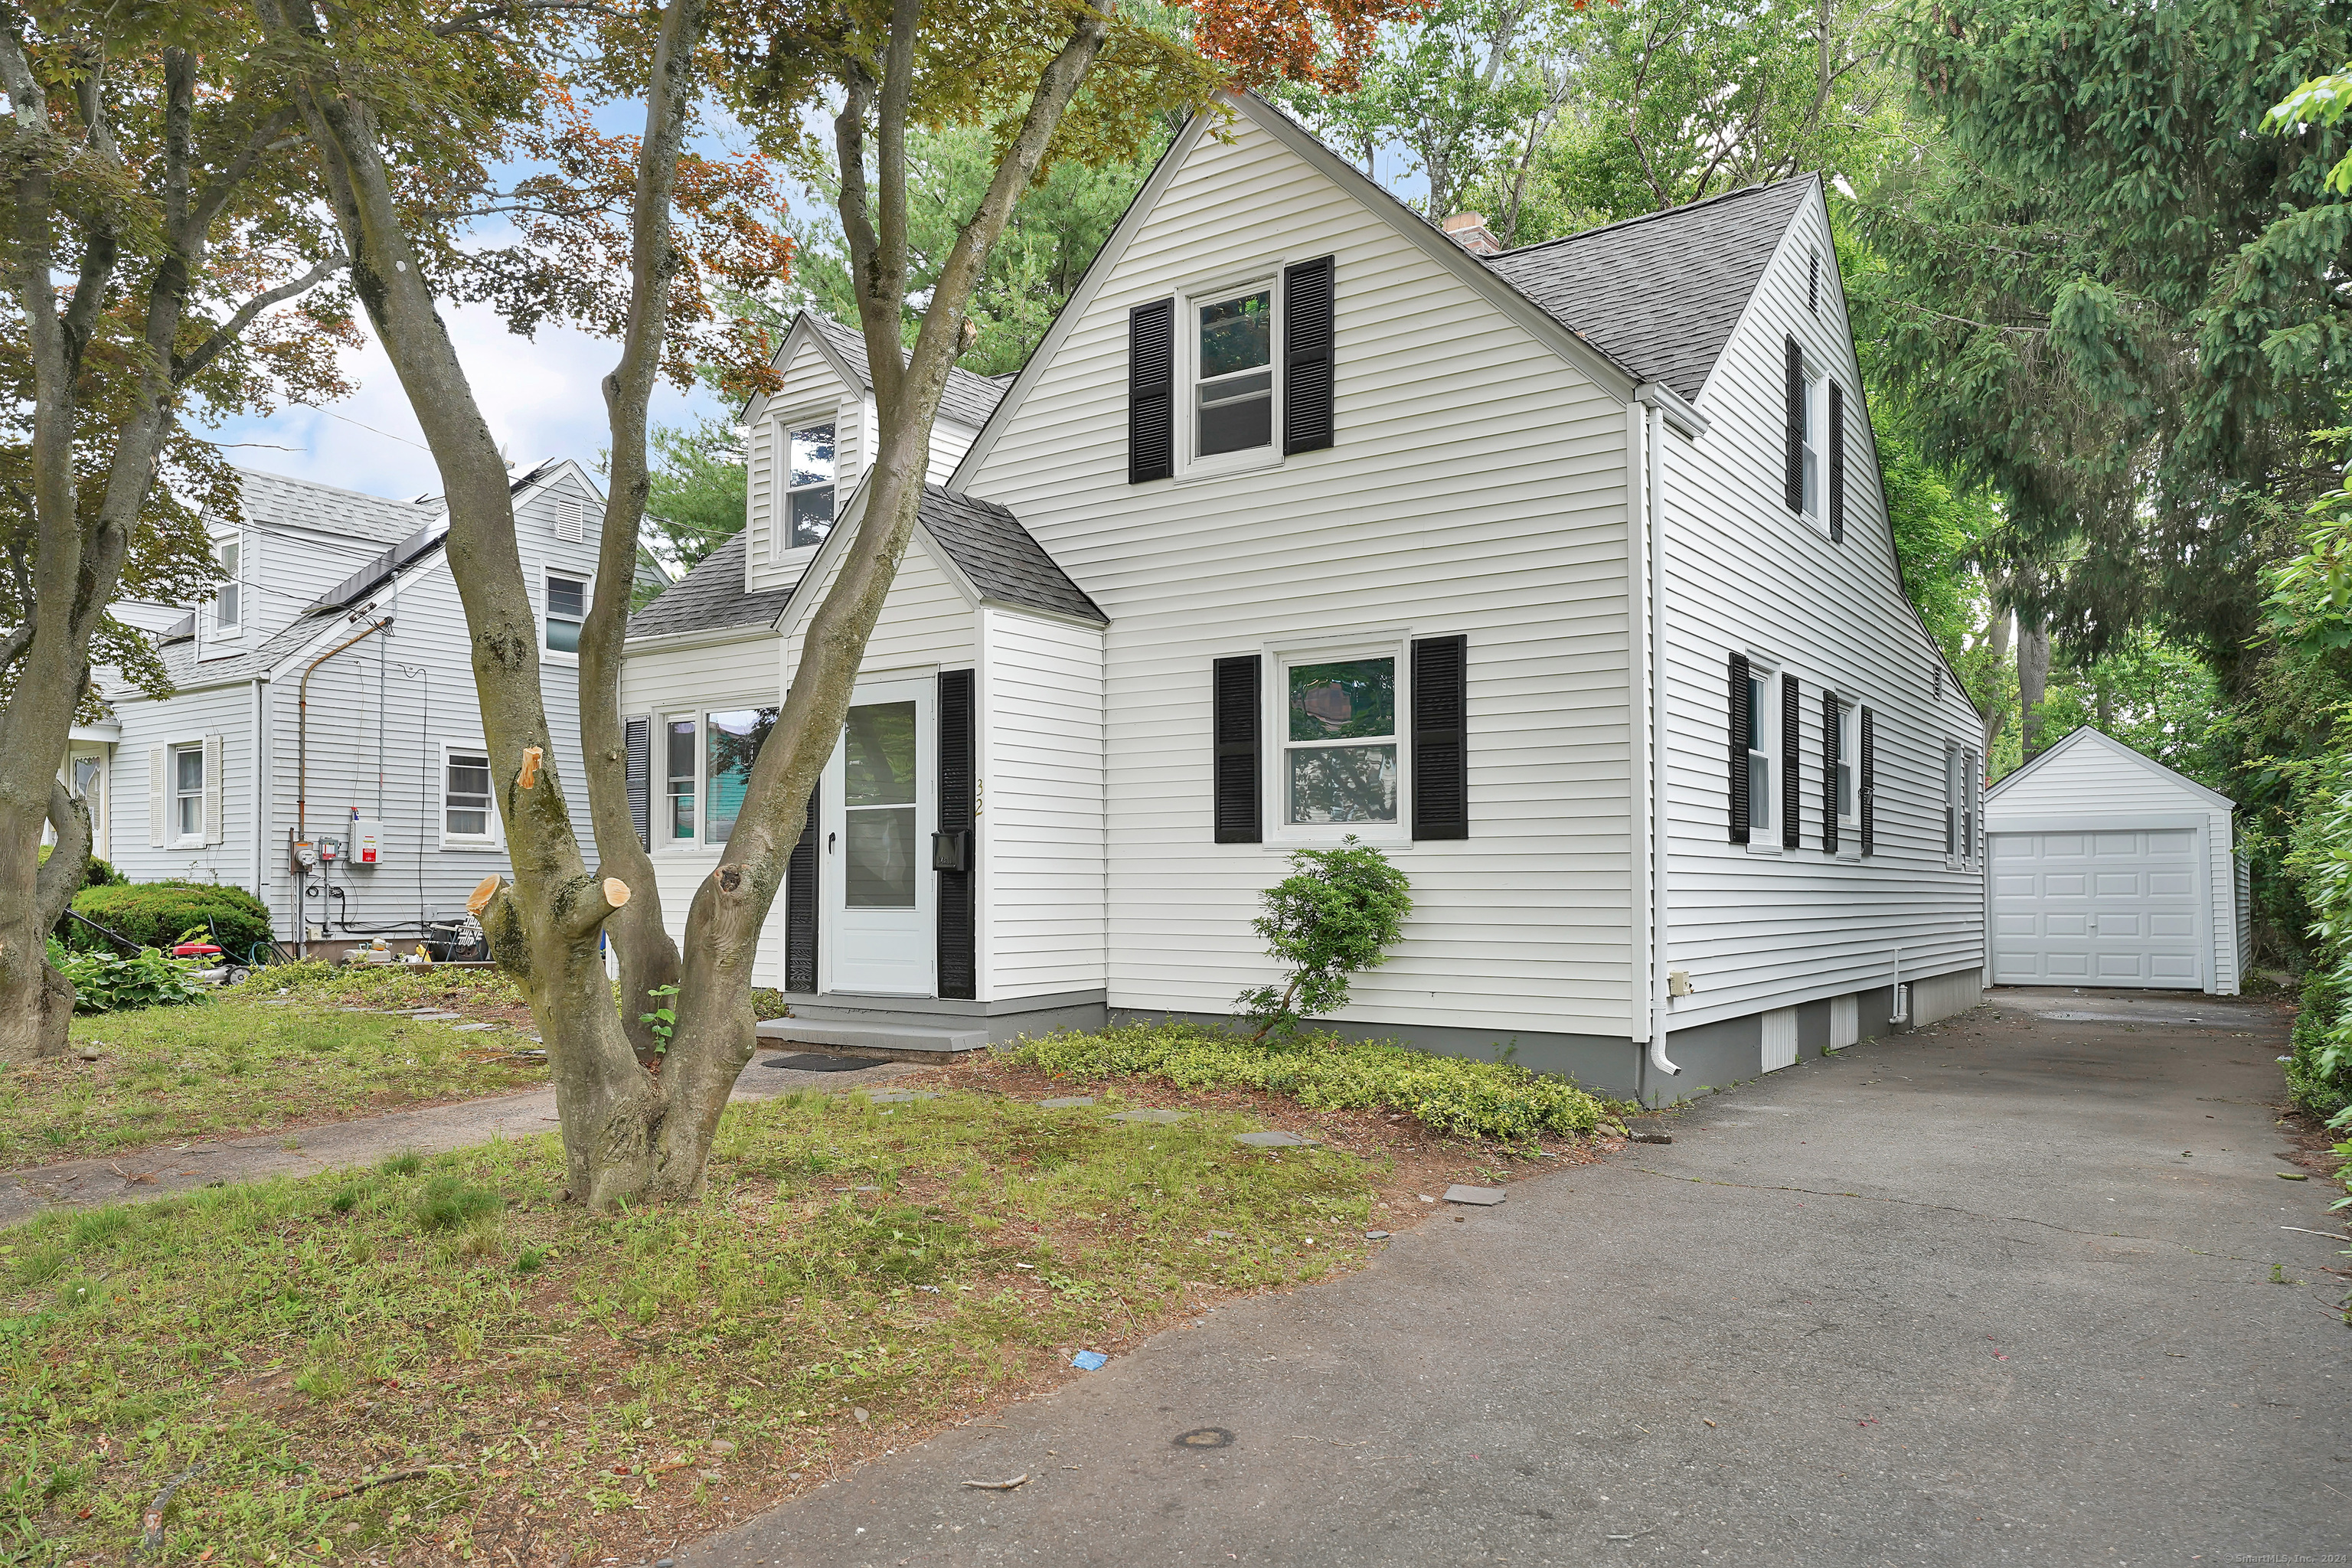 Property for Sale at 32 Harding Street, Hamden, Connecticut - Bedrooms: 3 
Bathrooms: 2 
Rooms: 6  - $385,000